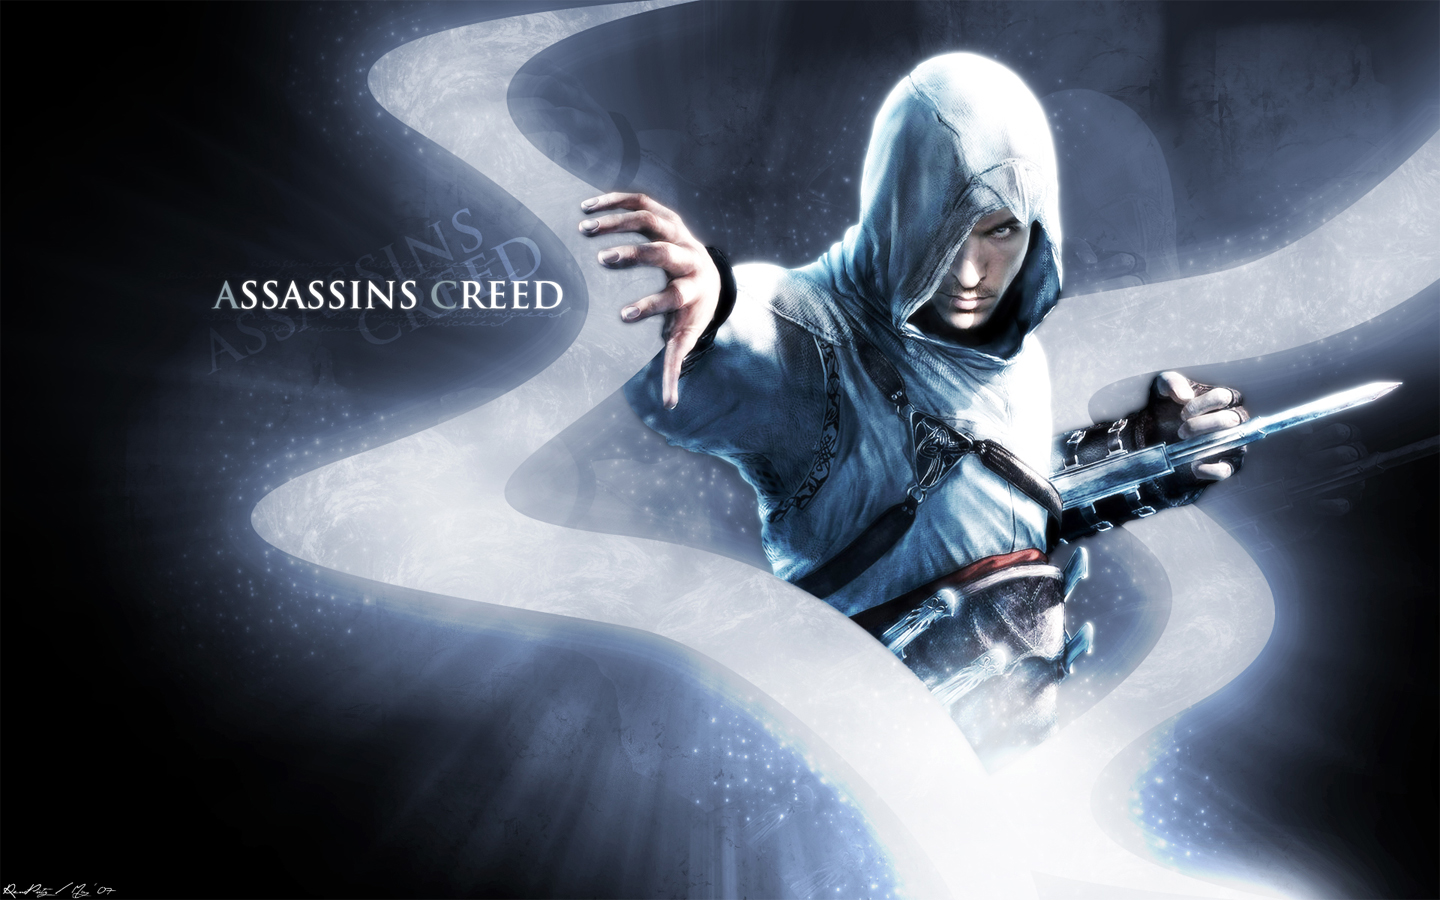  لعبه Assassins-Creed-HD-S60v3 حصريا Assassin%2527s+creed+3+wallpaper+hd+3